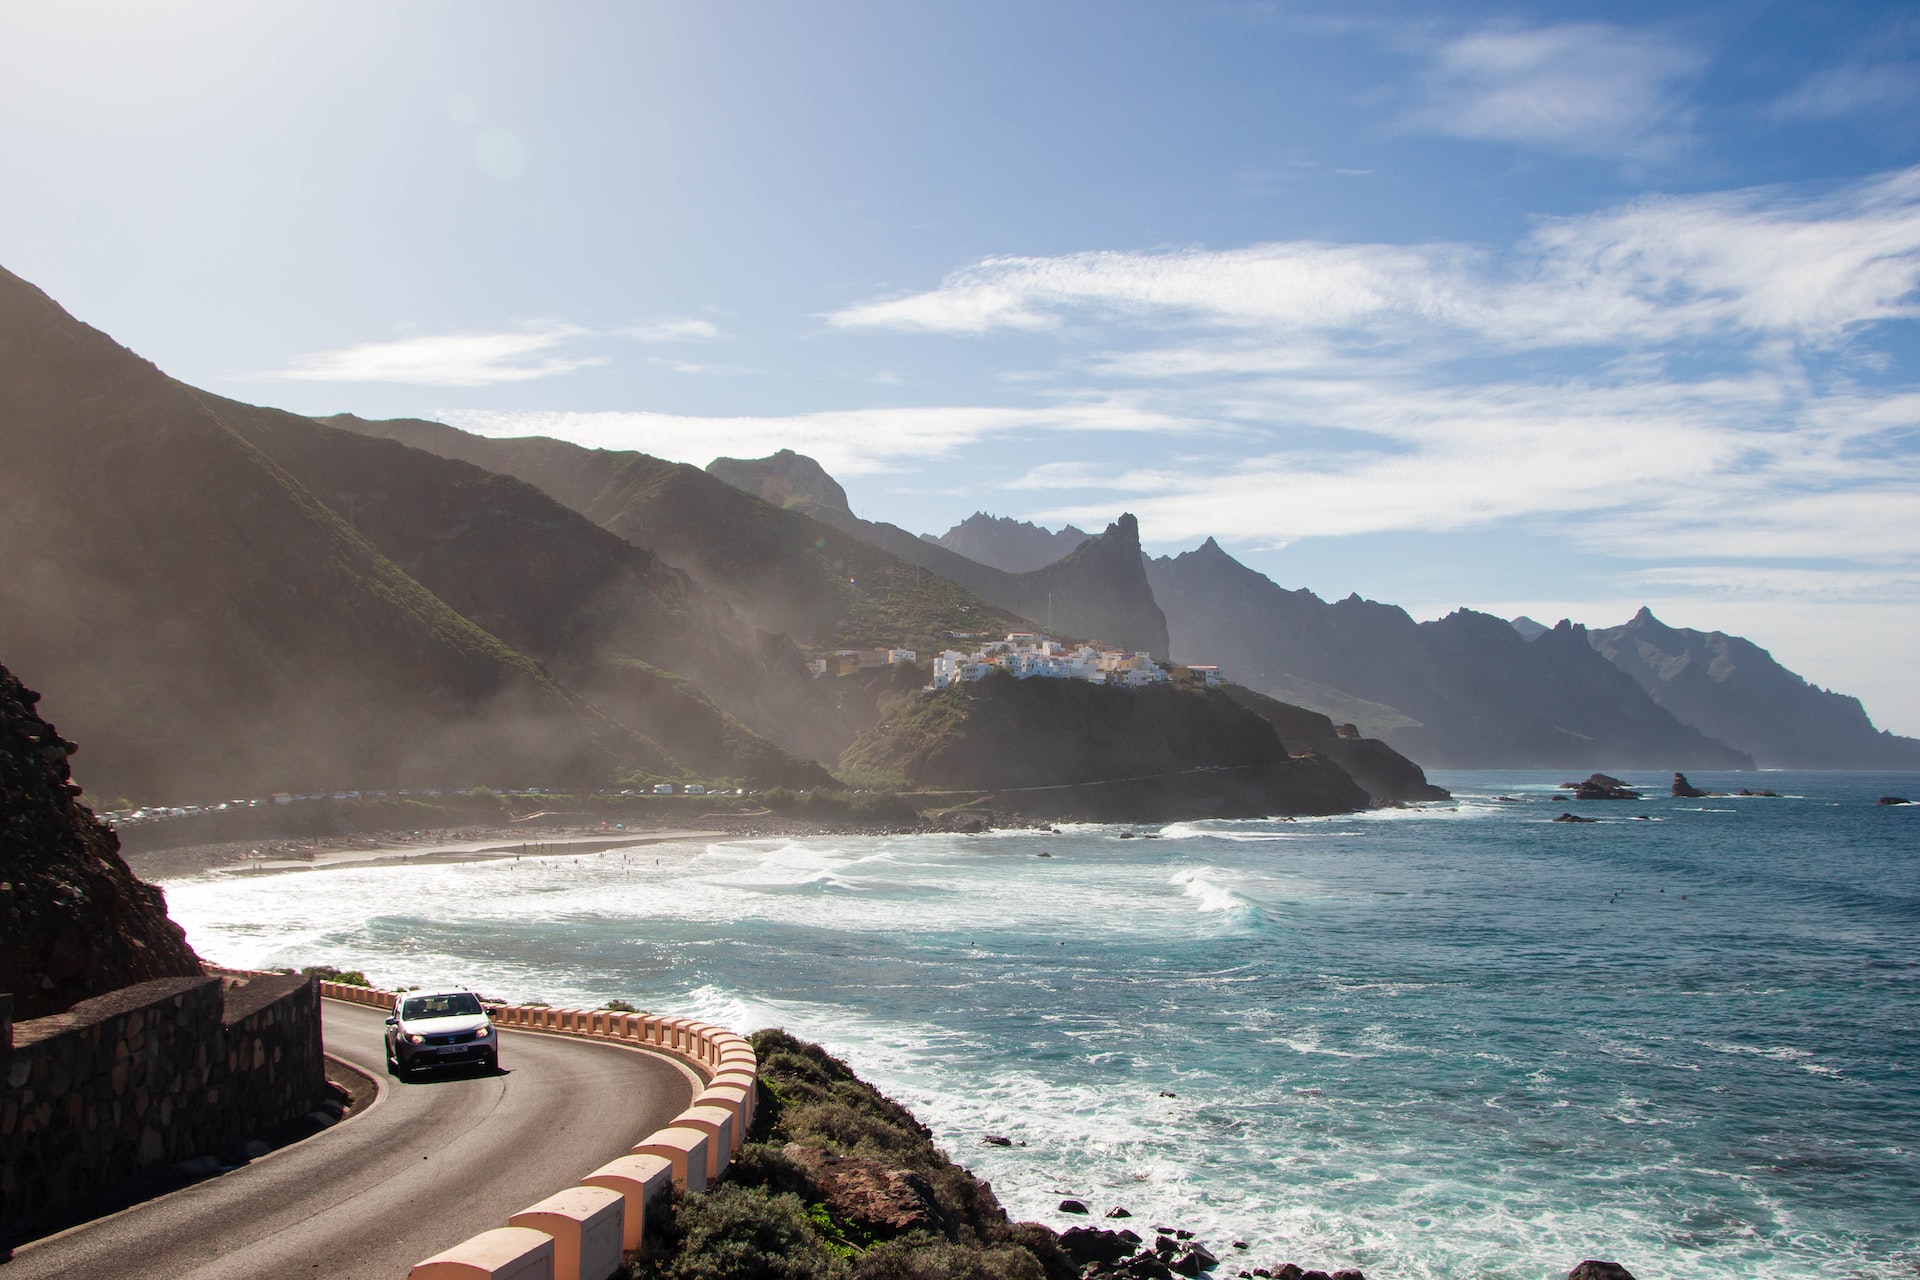 8 Enjoyable Issues to Do in Tenerife – The 5 Star Luxurious Lodge Neighborhood